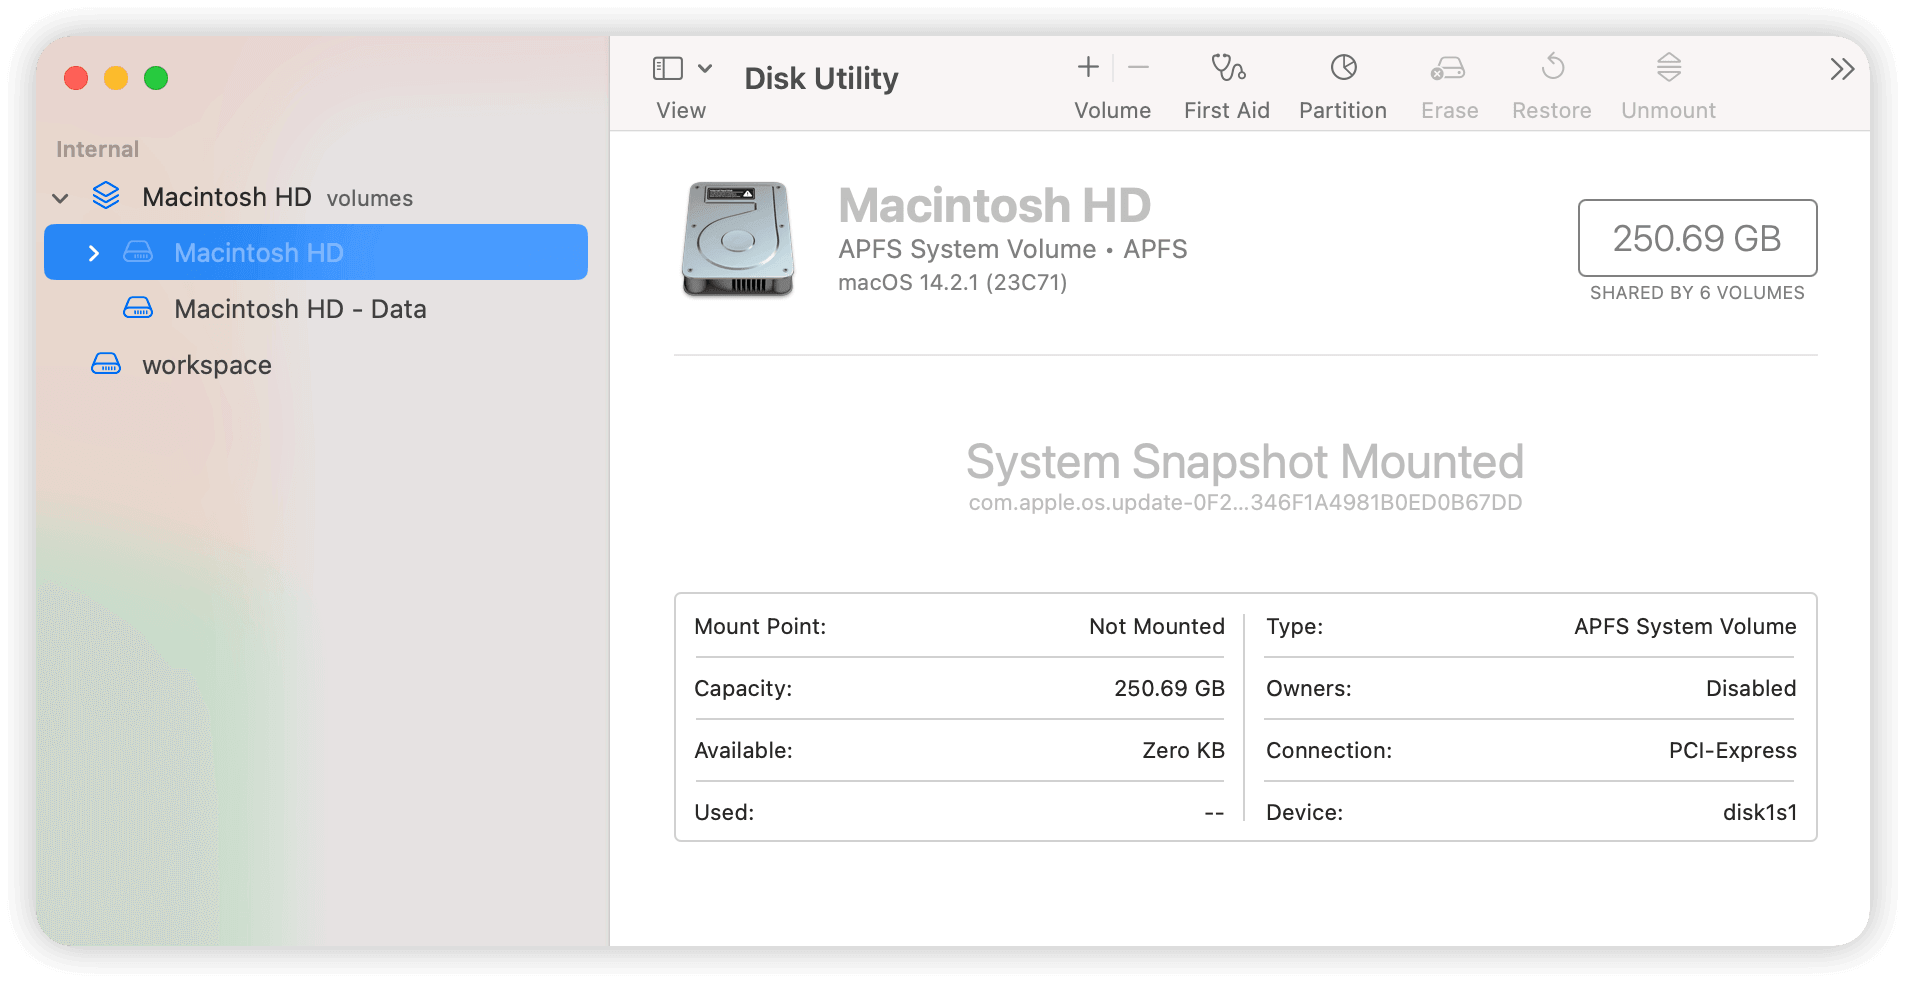 Macintosh HD and Macintosh HD volumes in Disk Utility